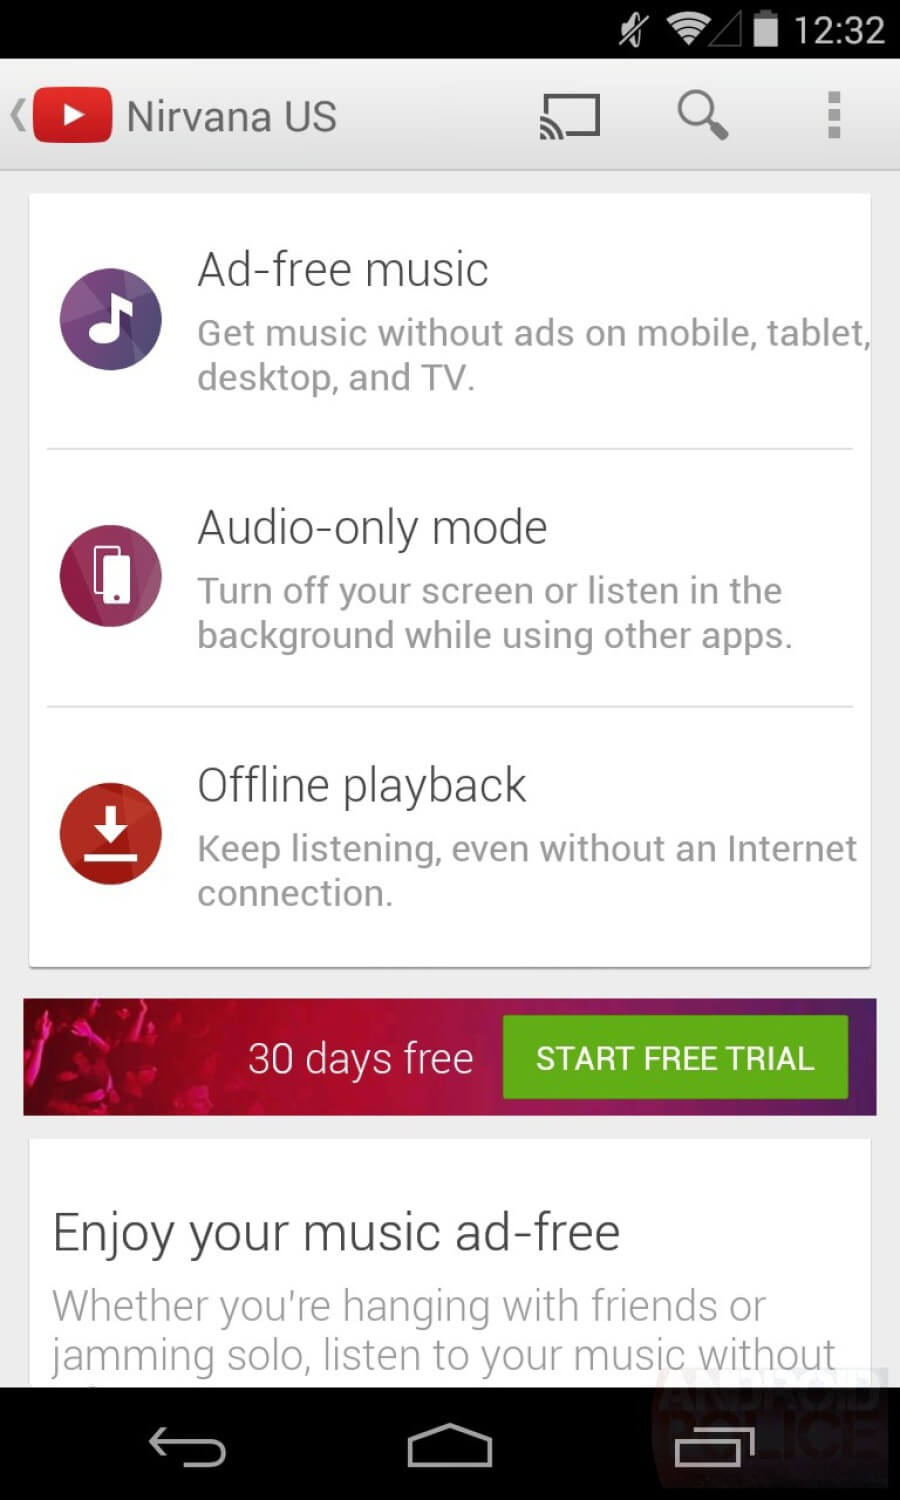 Вместо Google Music нас ждут YouTube Music Key и Google Play Music Key. Фото.